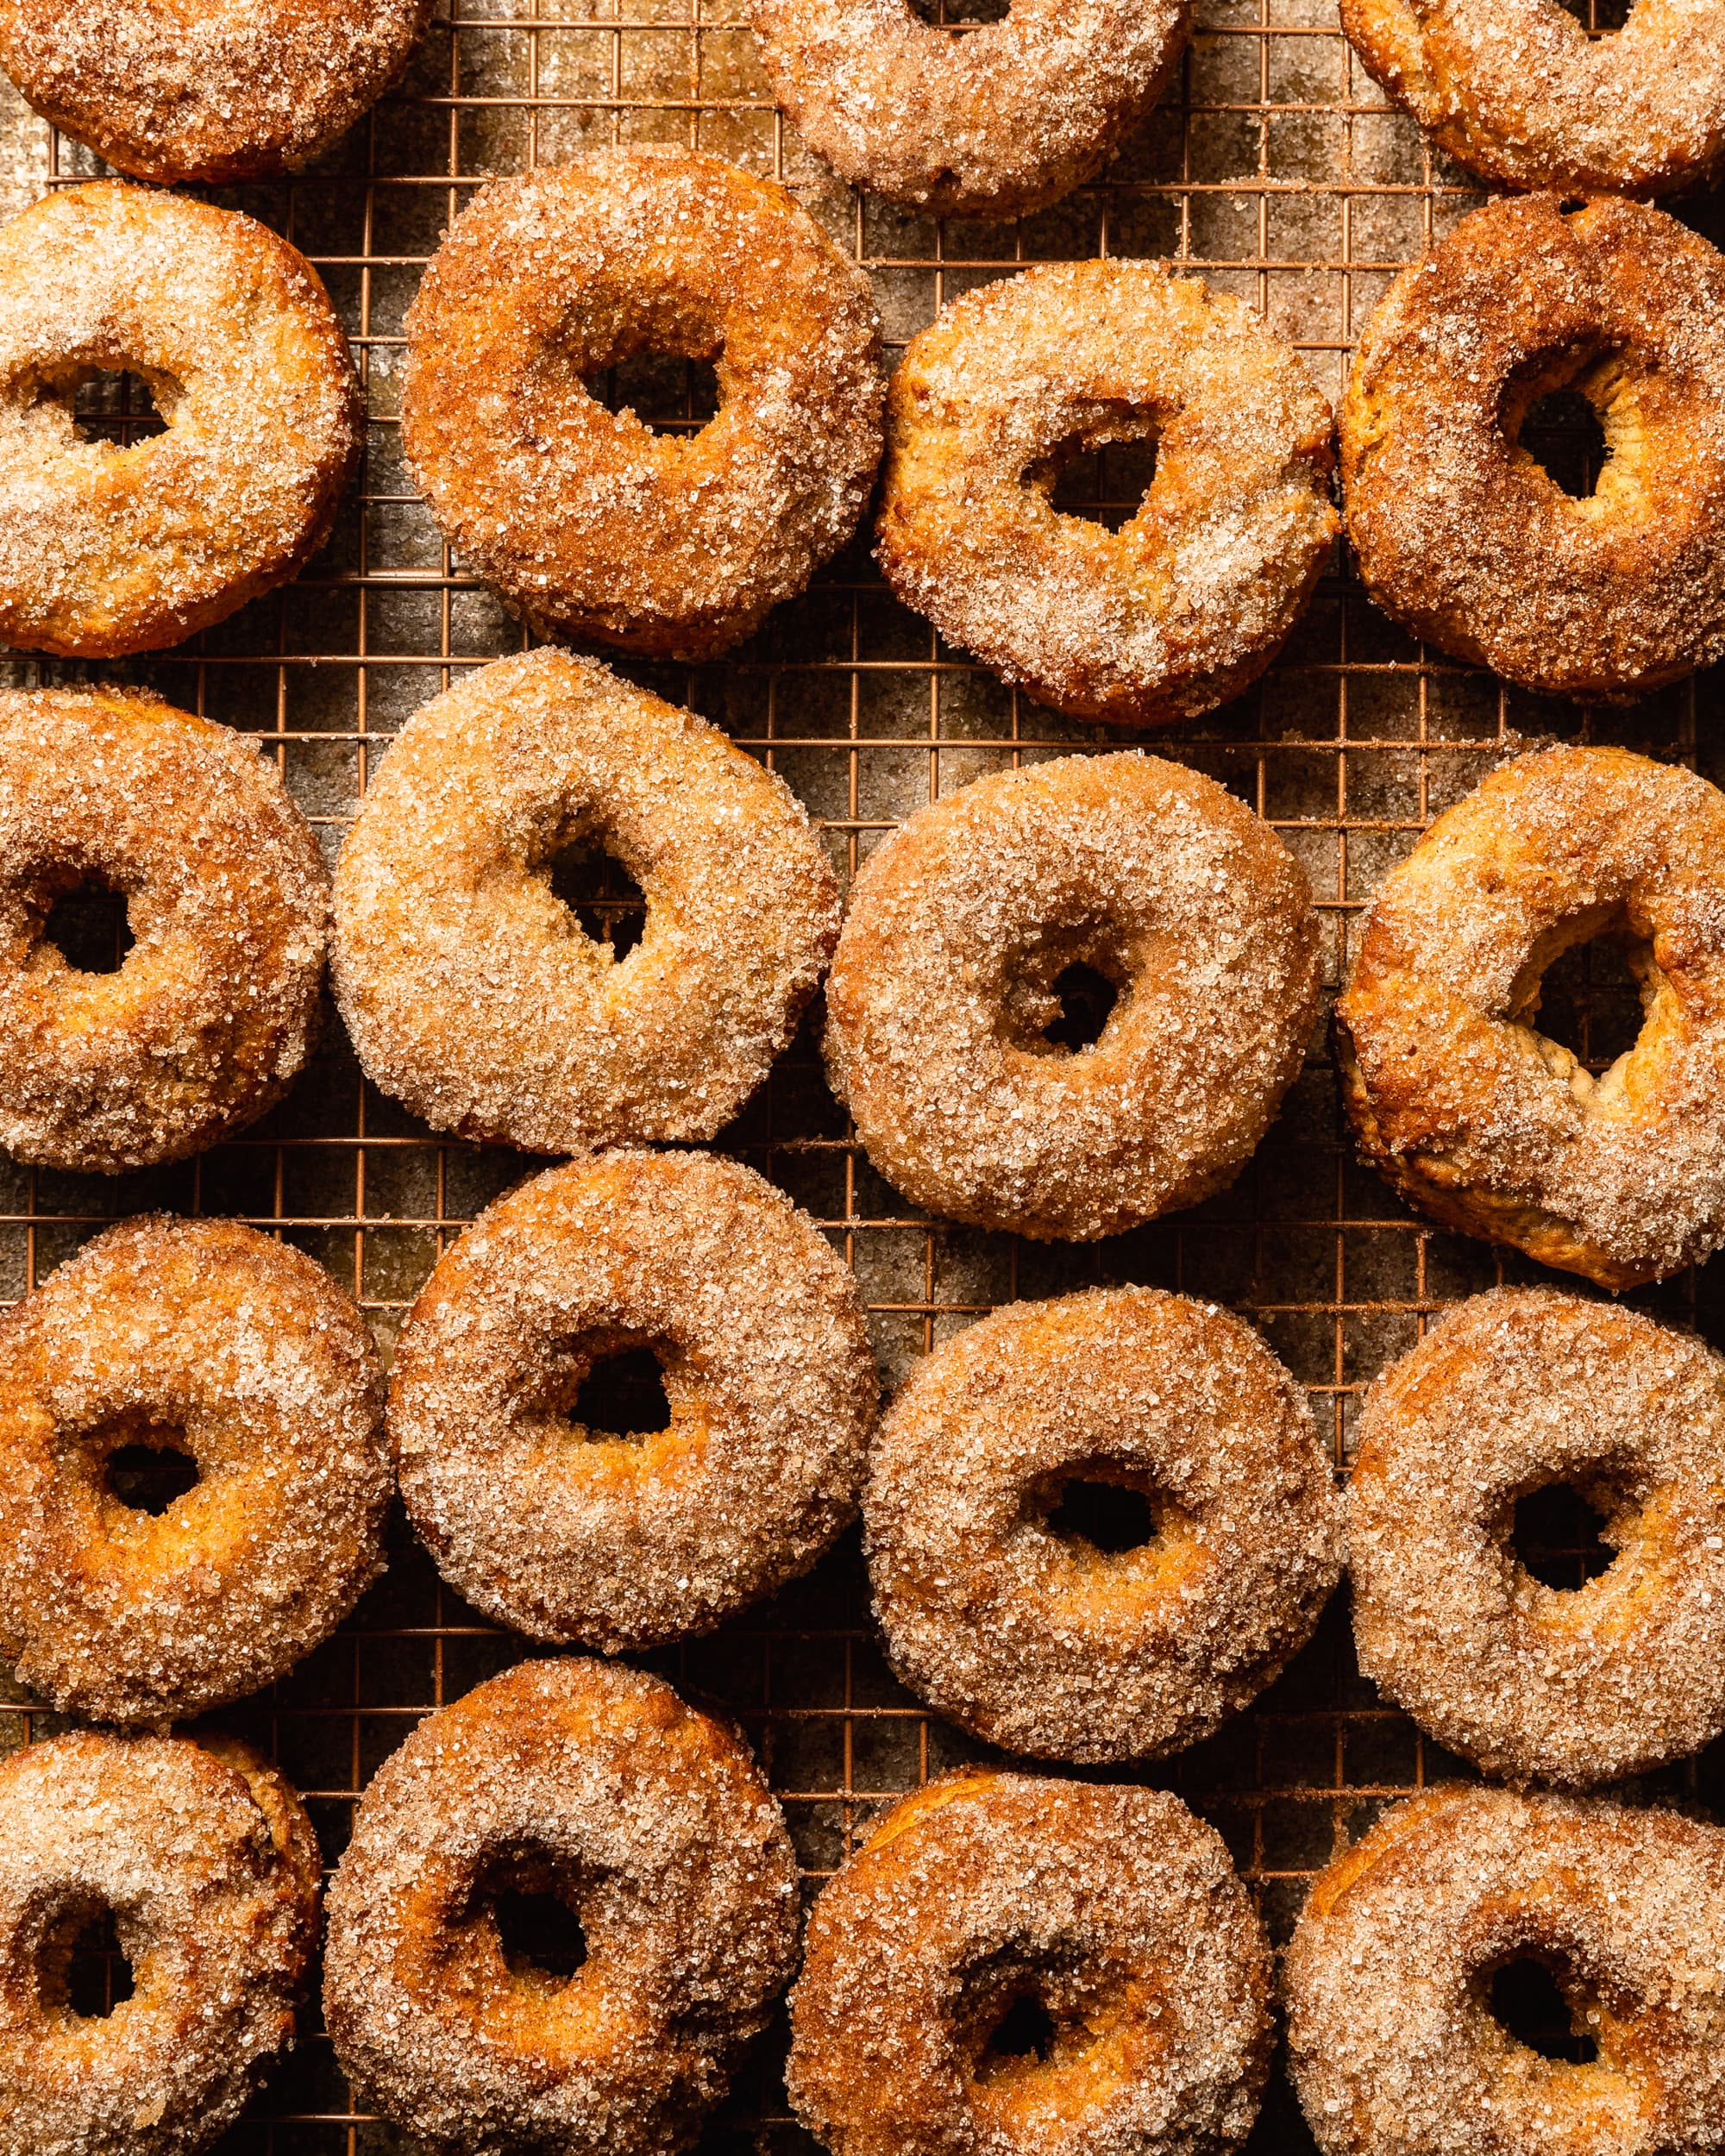 https://cdn.apartmenttherapy.info/image/upload/v1570721533/k/Photo/Recipes/2019-10-recipe-instant-pot-apple-cider-donuts/AppleCiderDonutsOption9.jpg